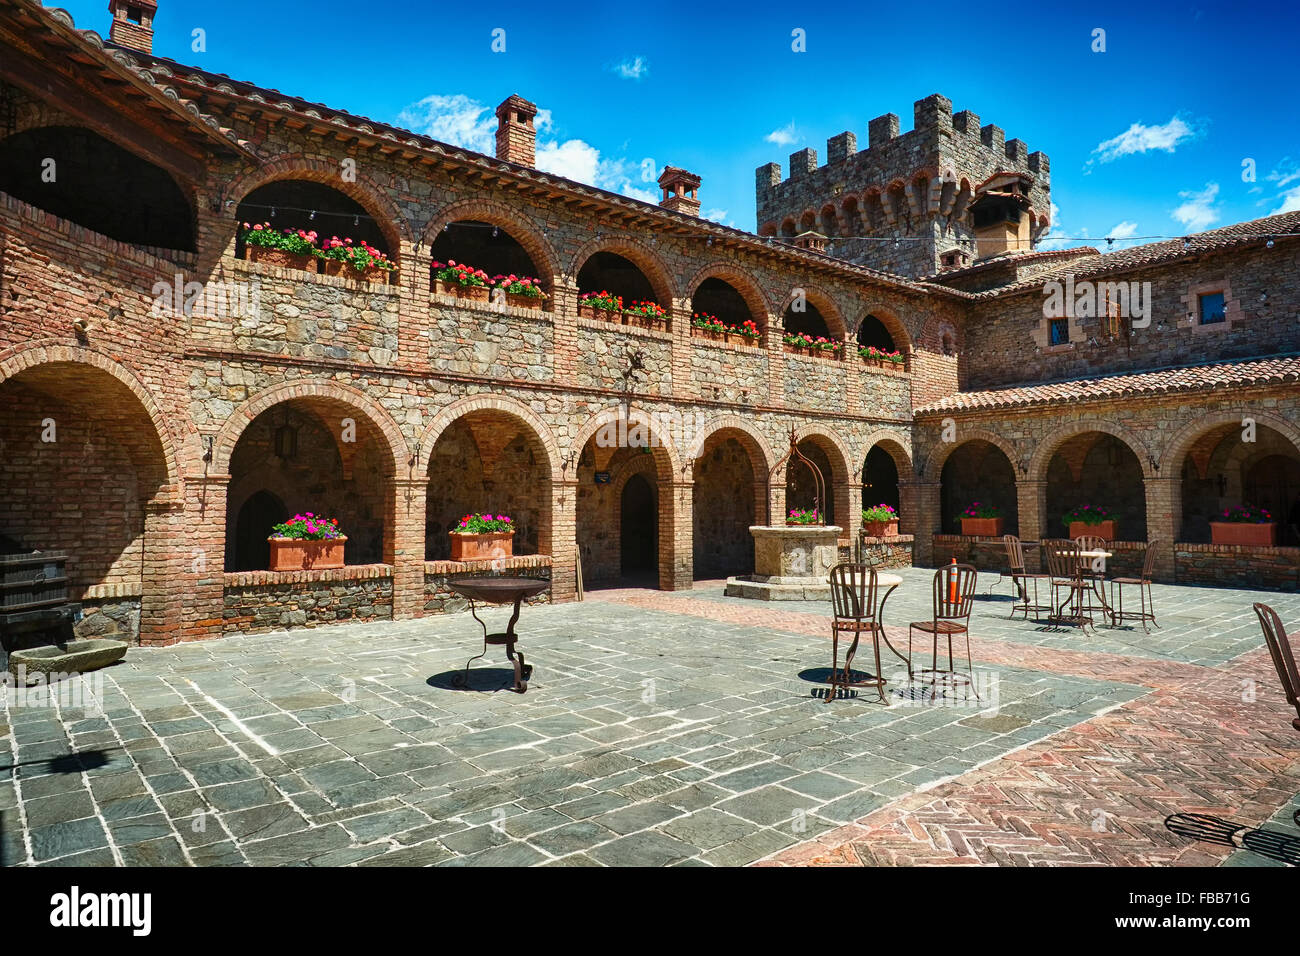 Courtyard of a Tuscan Style Castle; Castello de Amorosa Winery Calistoga, Napa Valley, California Stock Photo